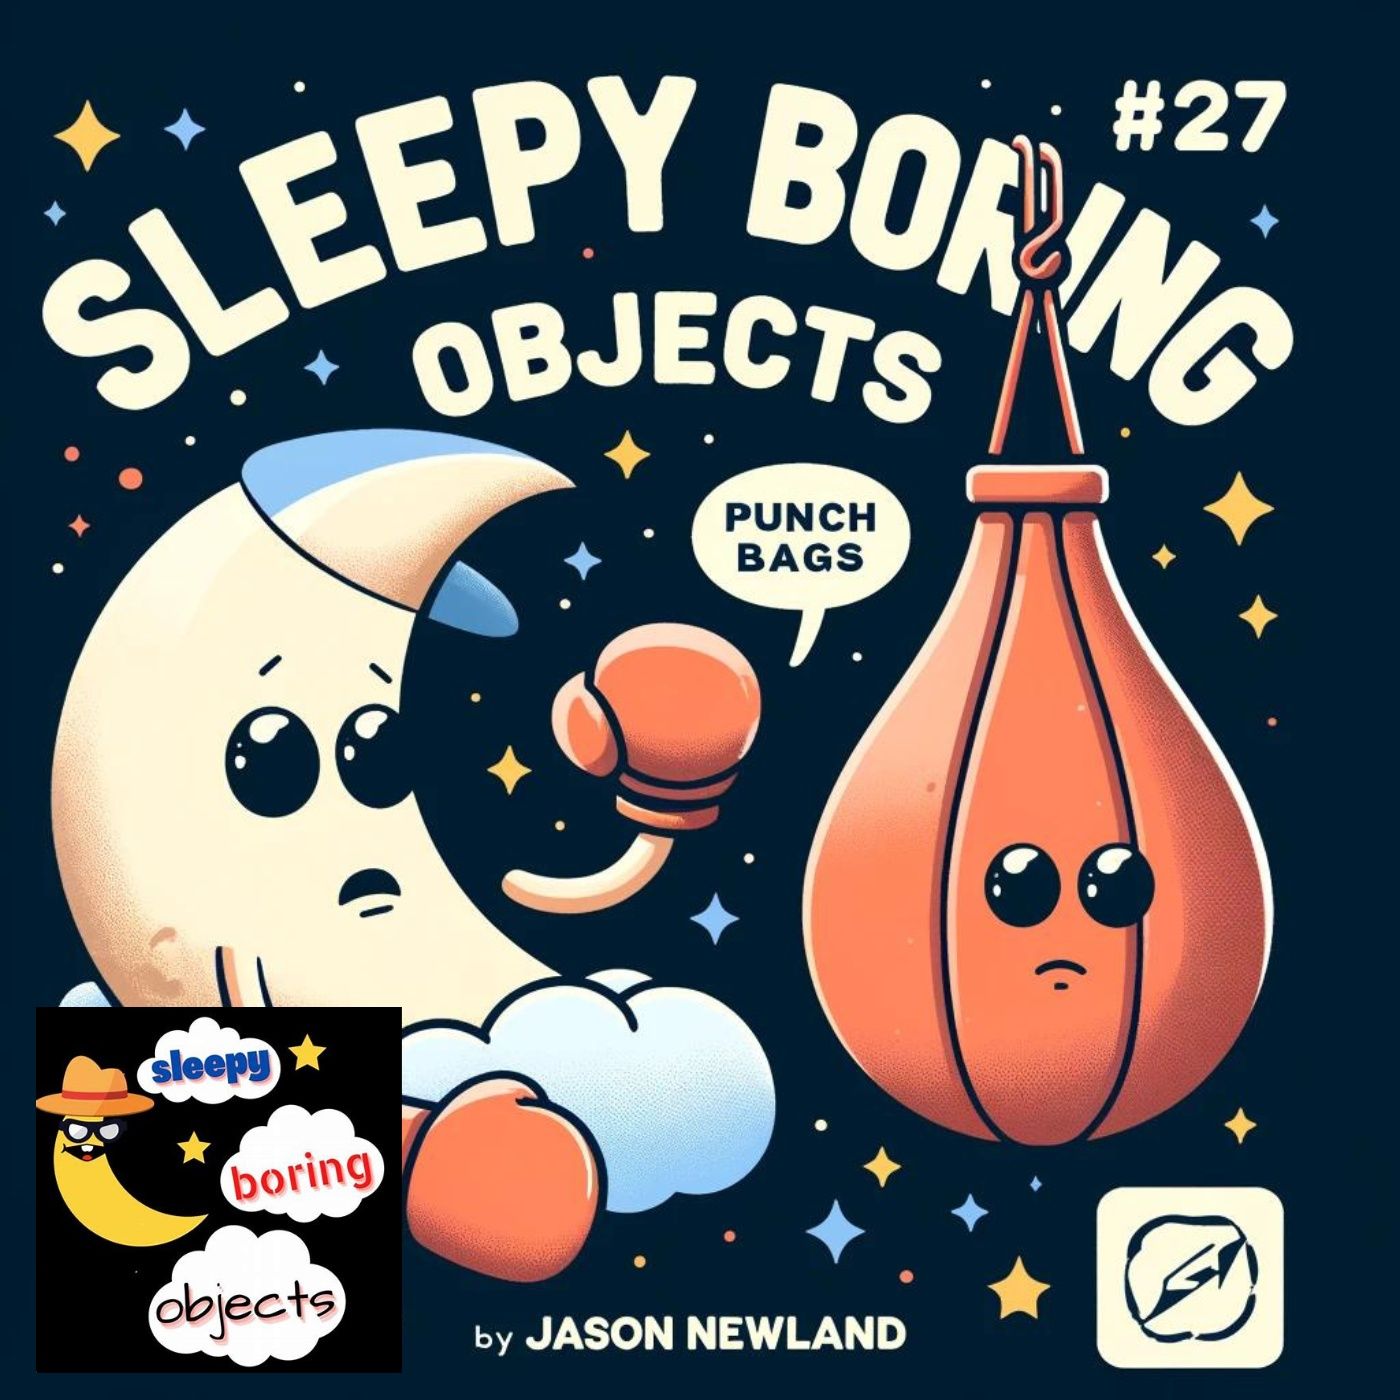 #27 “Punch bags” SLEEPY Boring Objects (Jason Newland) (30th May 2022)